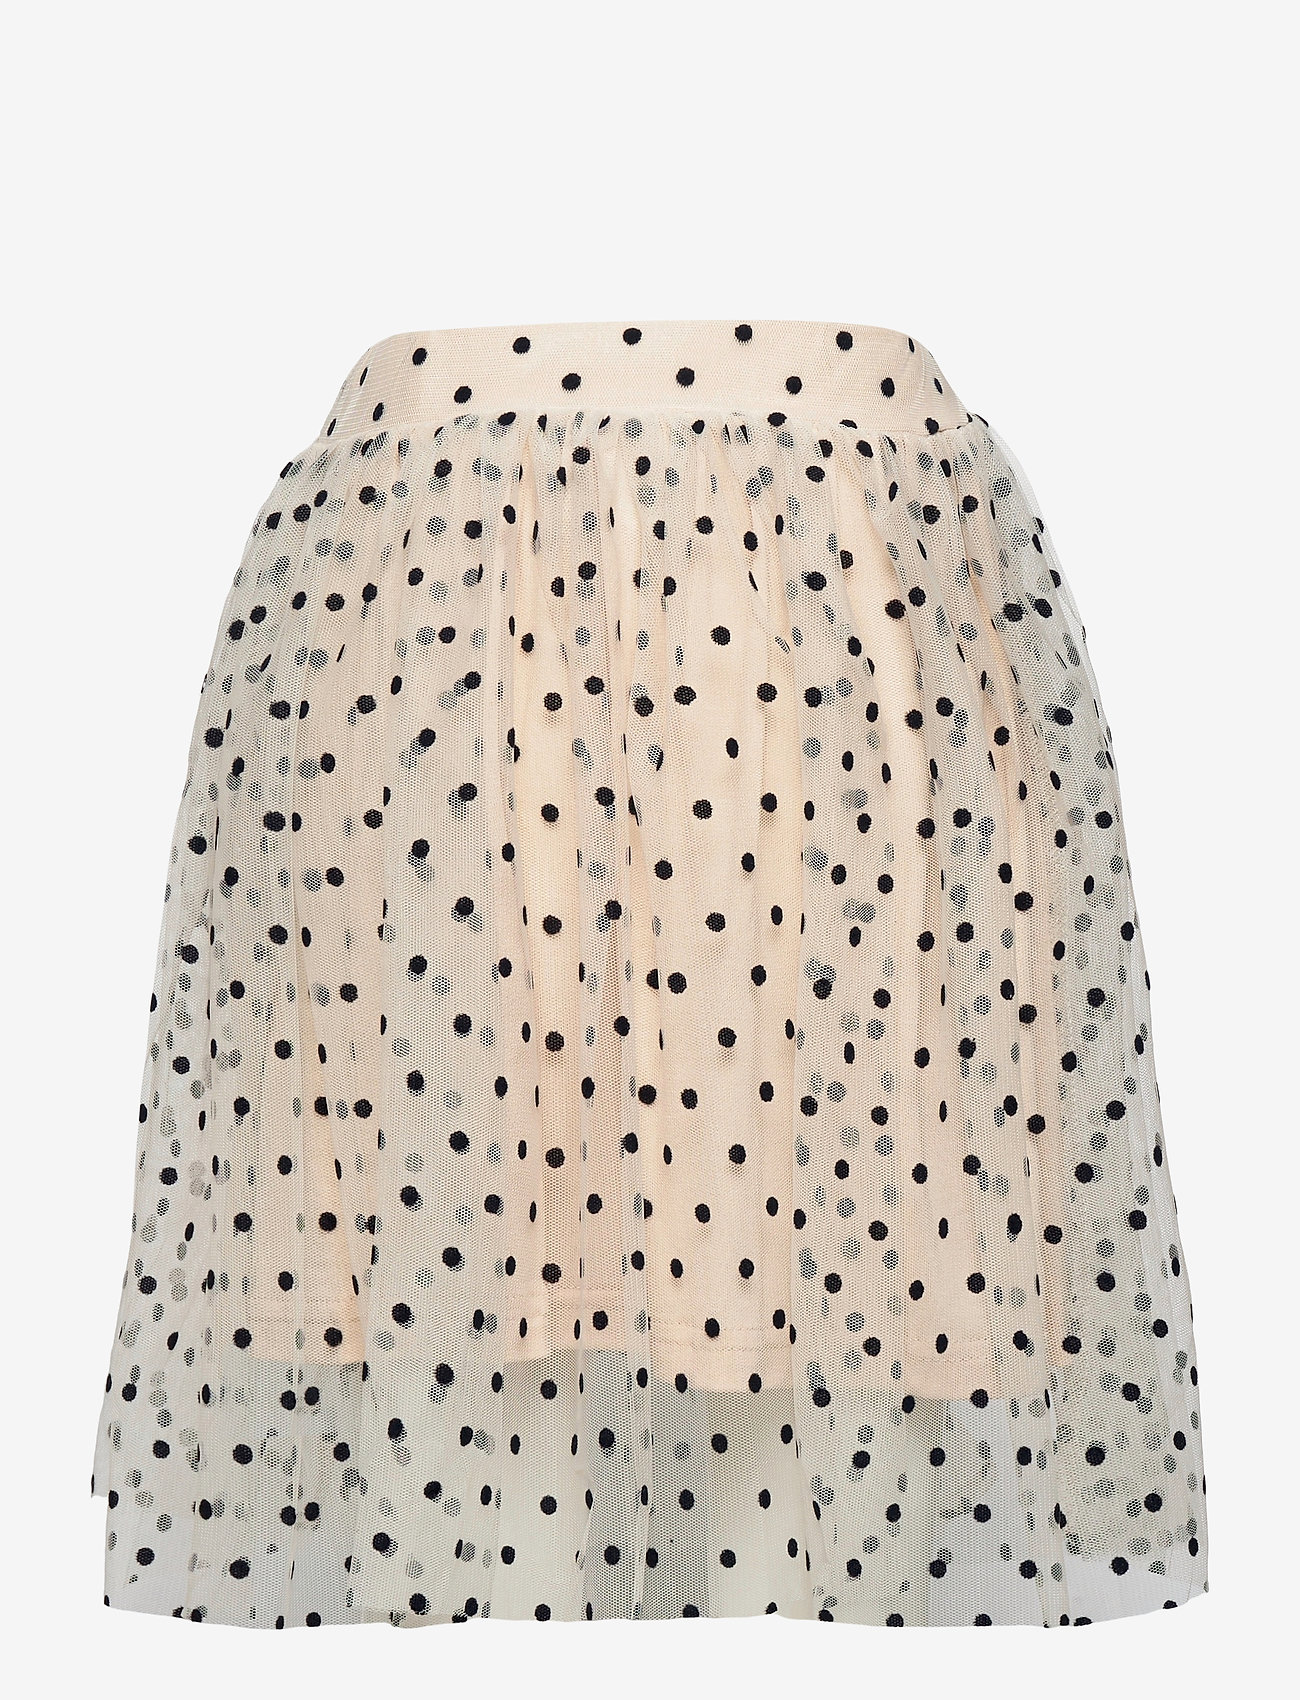 burberry dalmatian skirt